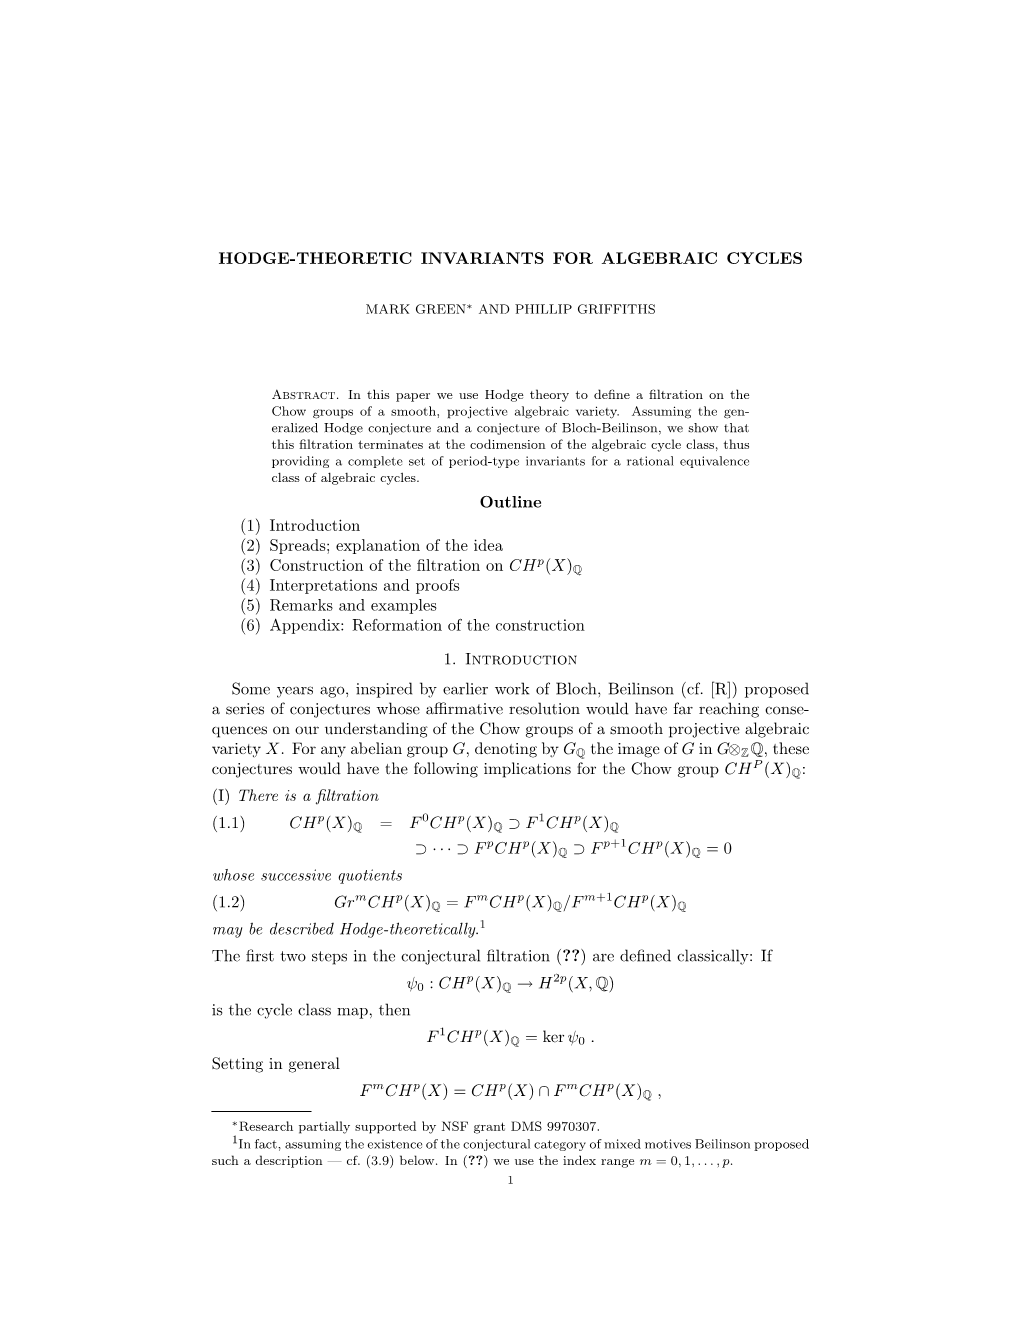 Hodge-Theoretic Invariants for Algebraic Cycles